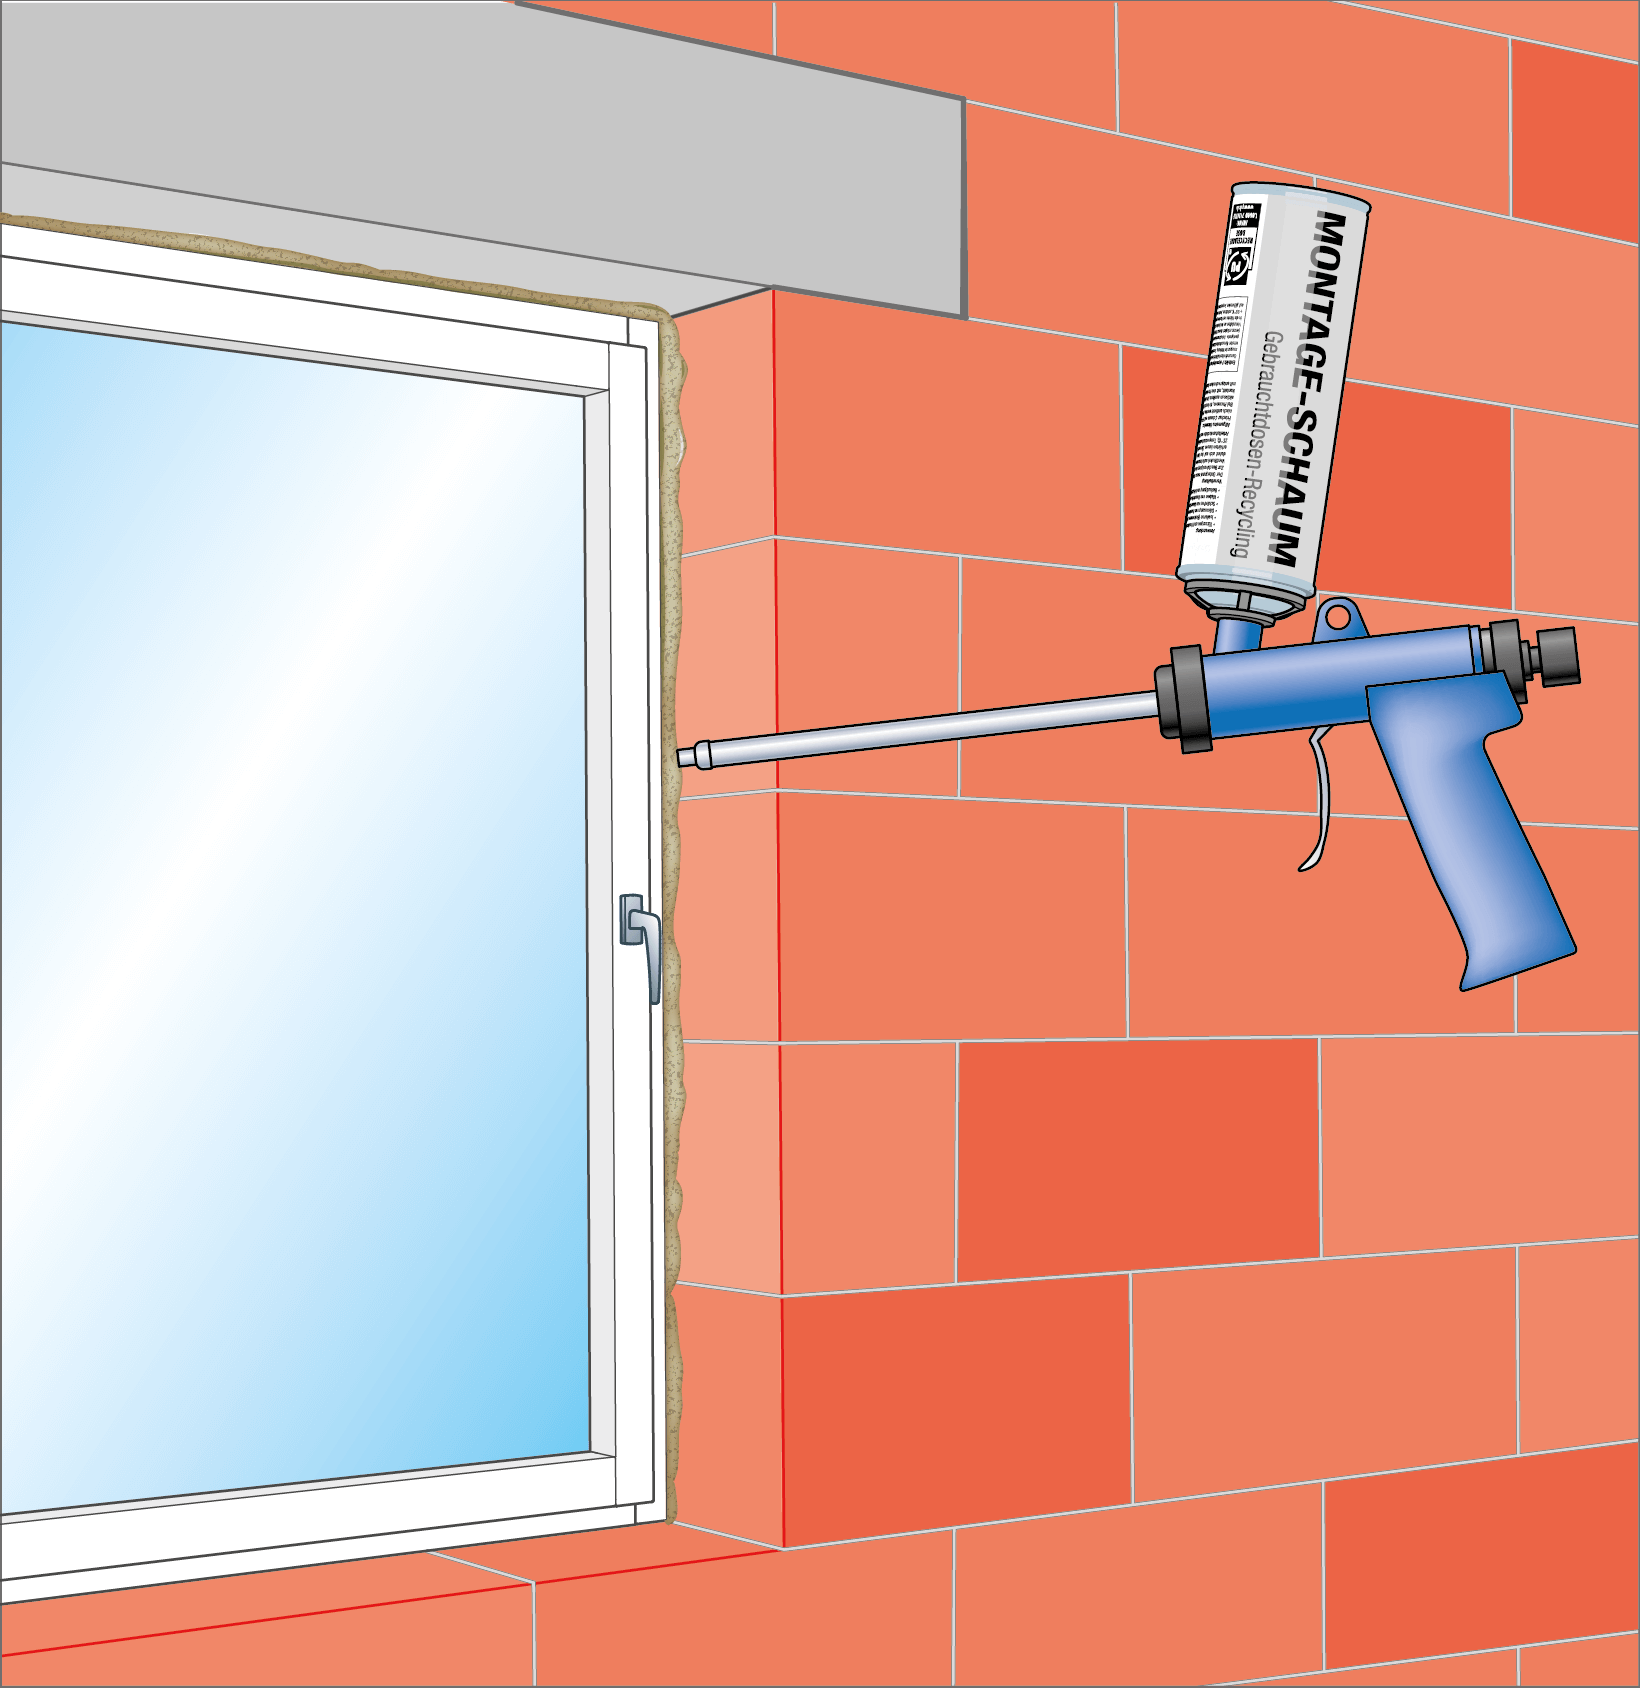 PU Schaum, Fensterschaum, (Effizienz, Sicherheit, Dämmung)